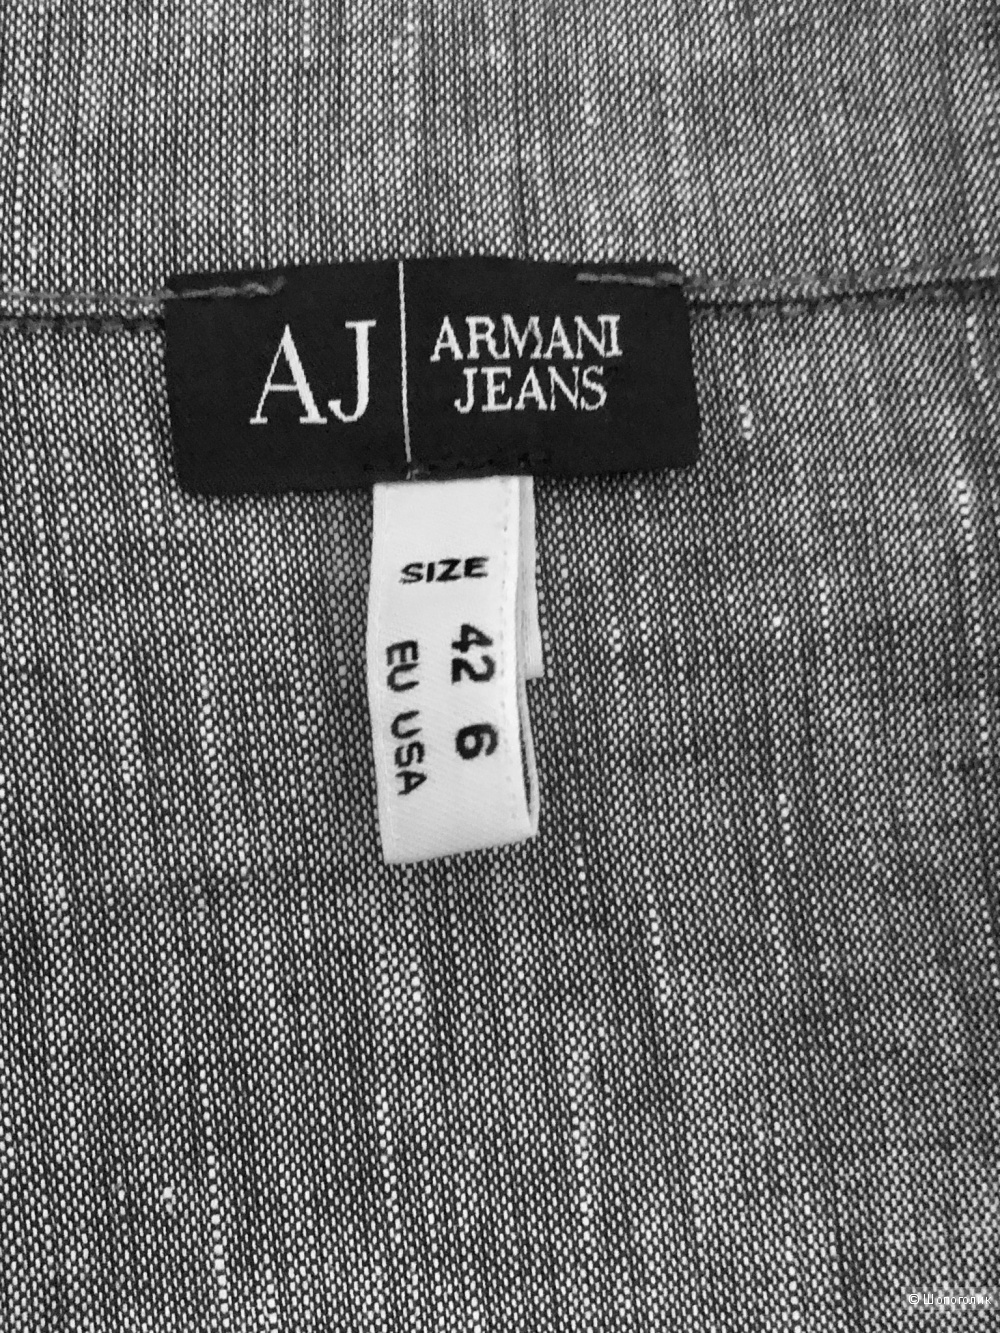 Пиджак Armani Jrans, размер S.